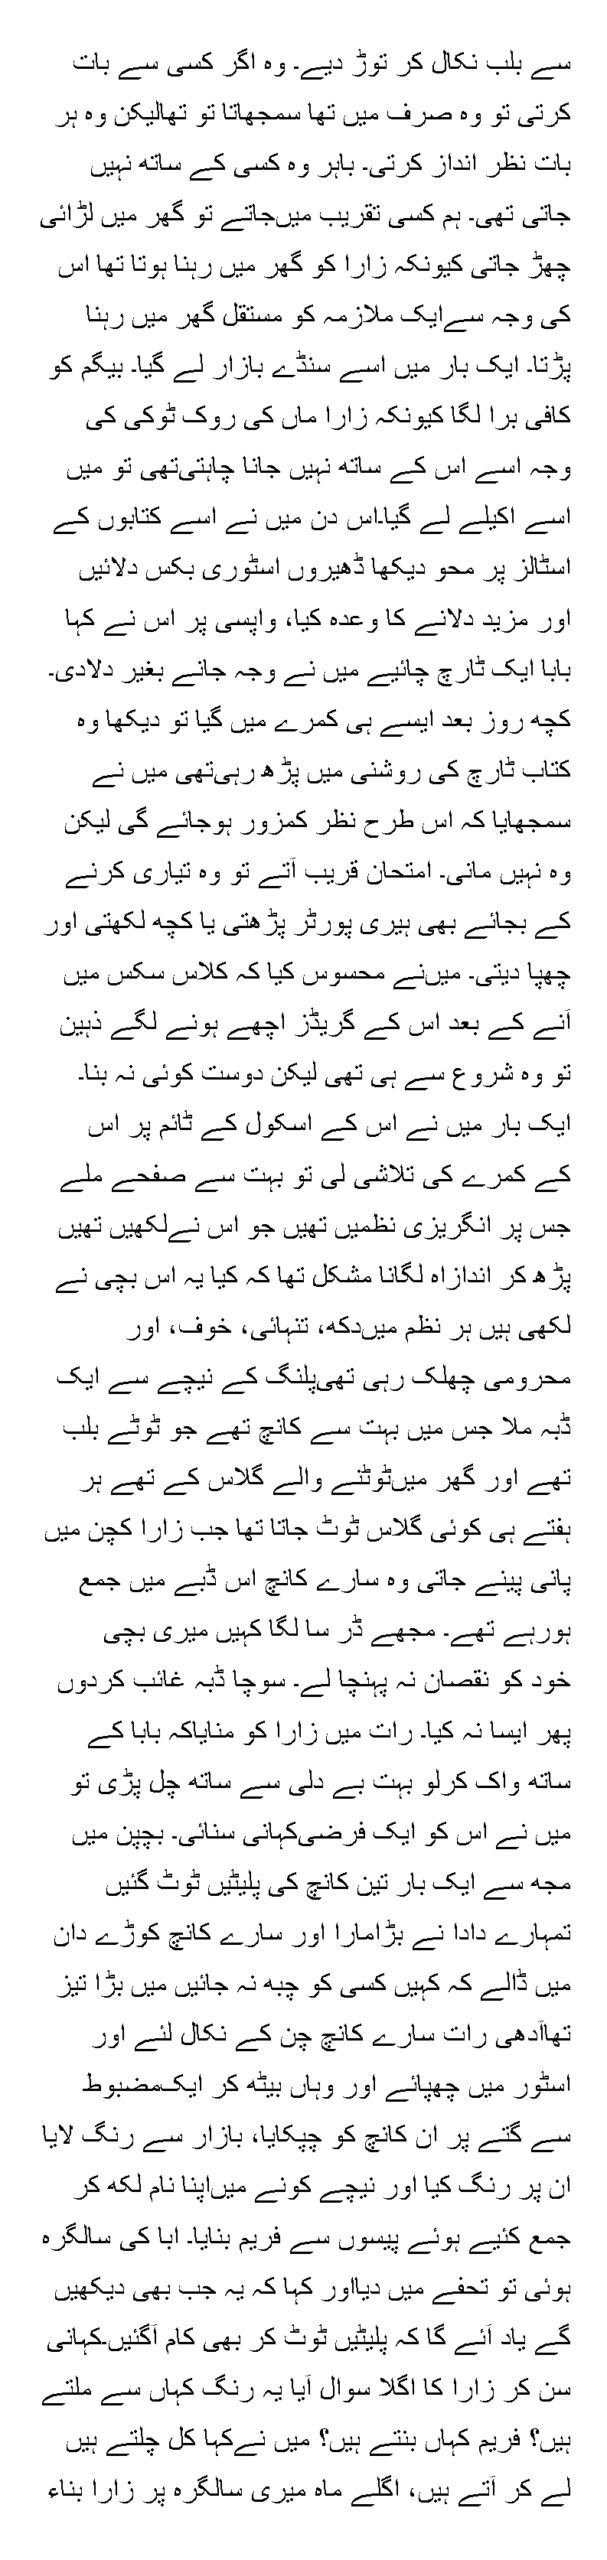 Written by Ashfaq Ahmad: Zara is my eldest daughter